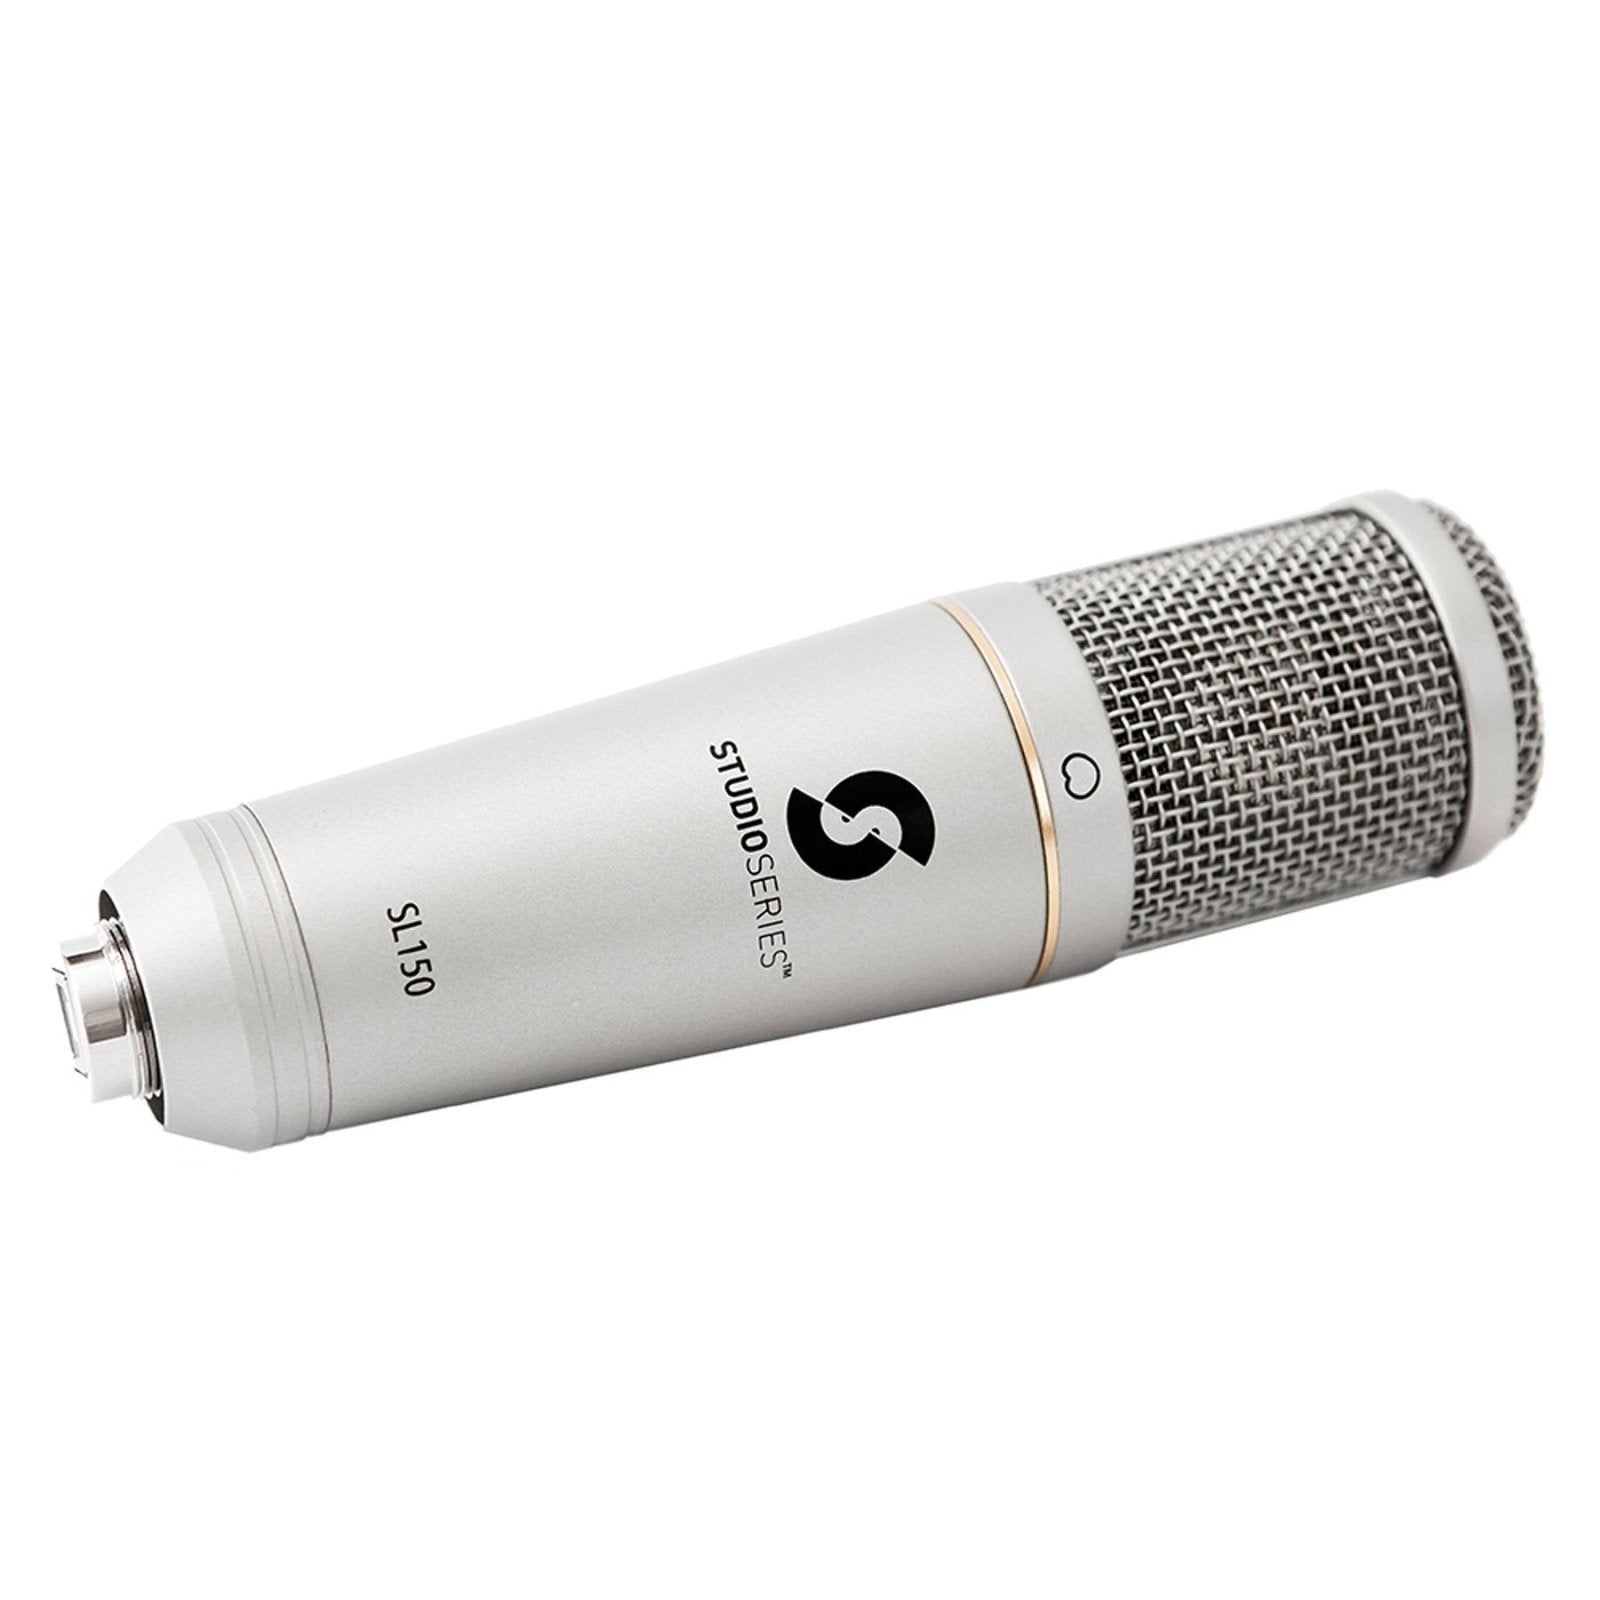 SL150 USB Gaming Microphone Bundle - Commentary Mic - Editors Keys